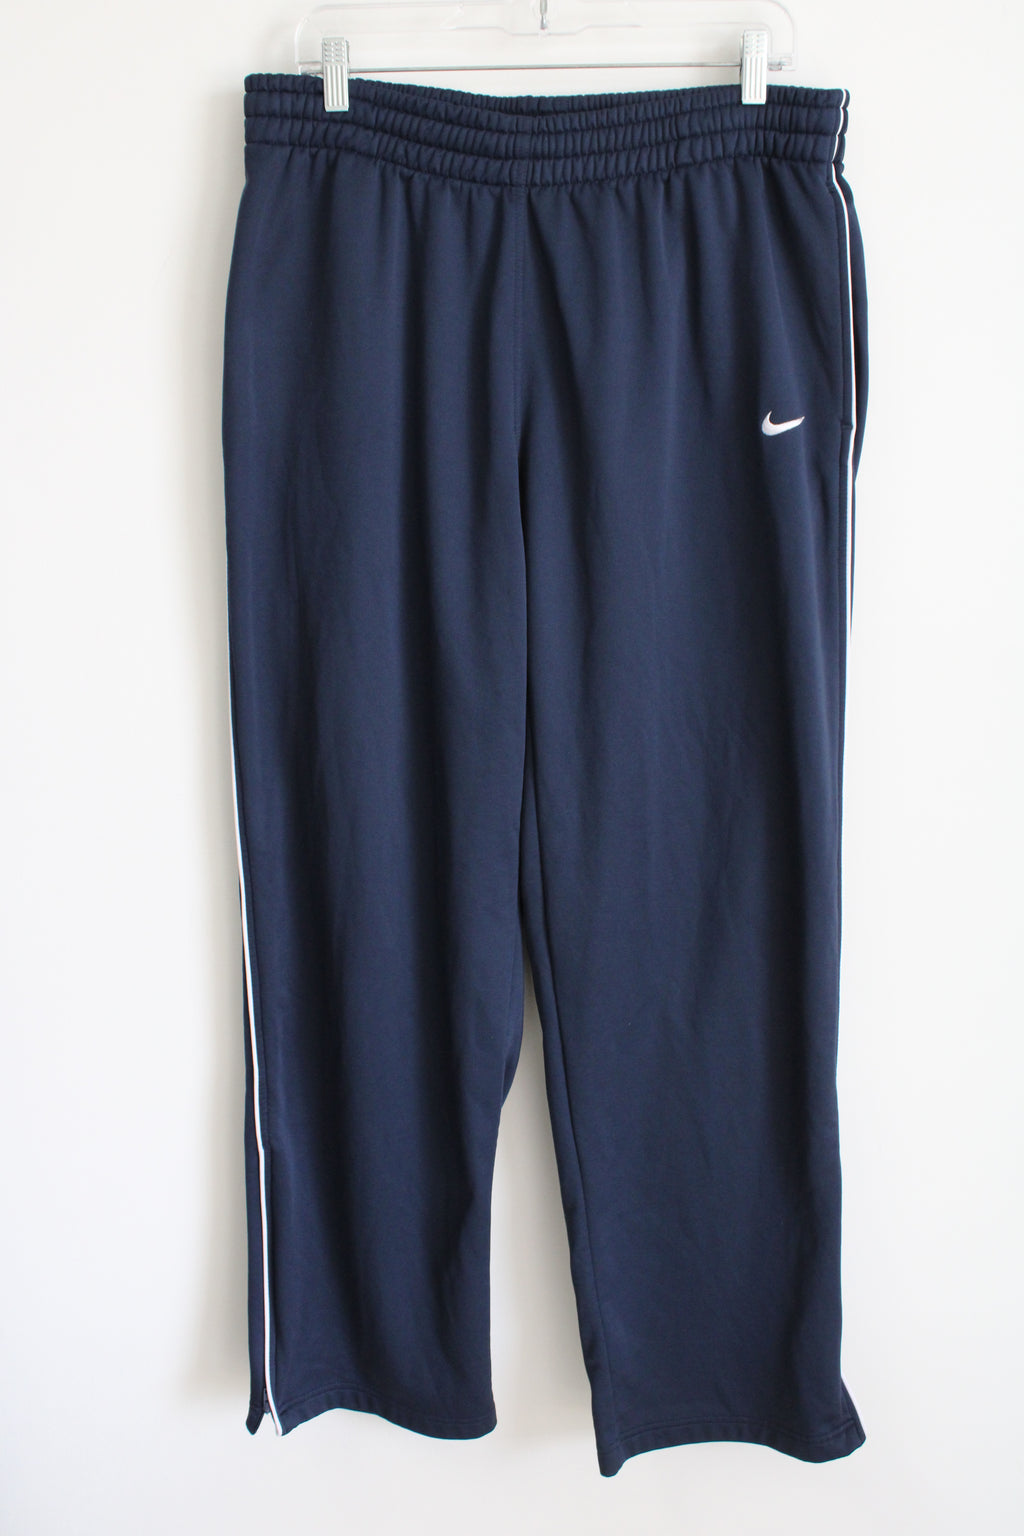 Nike Dark Navy Blue Fleece Pant | XL